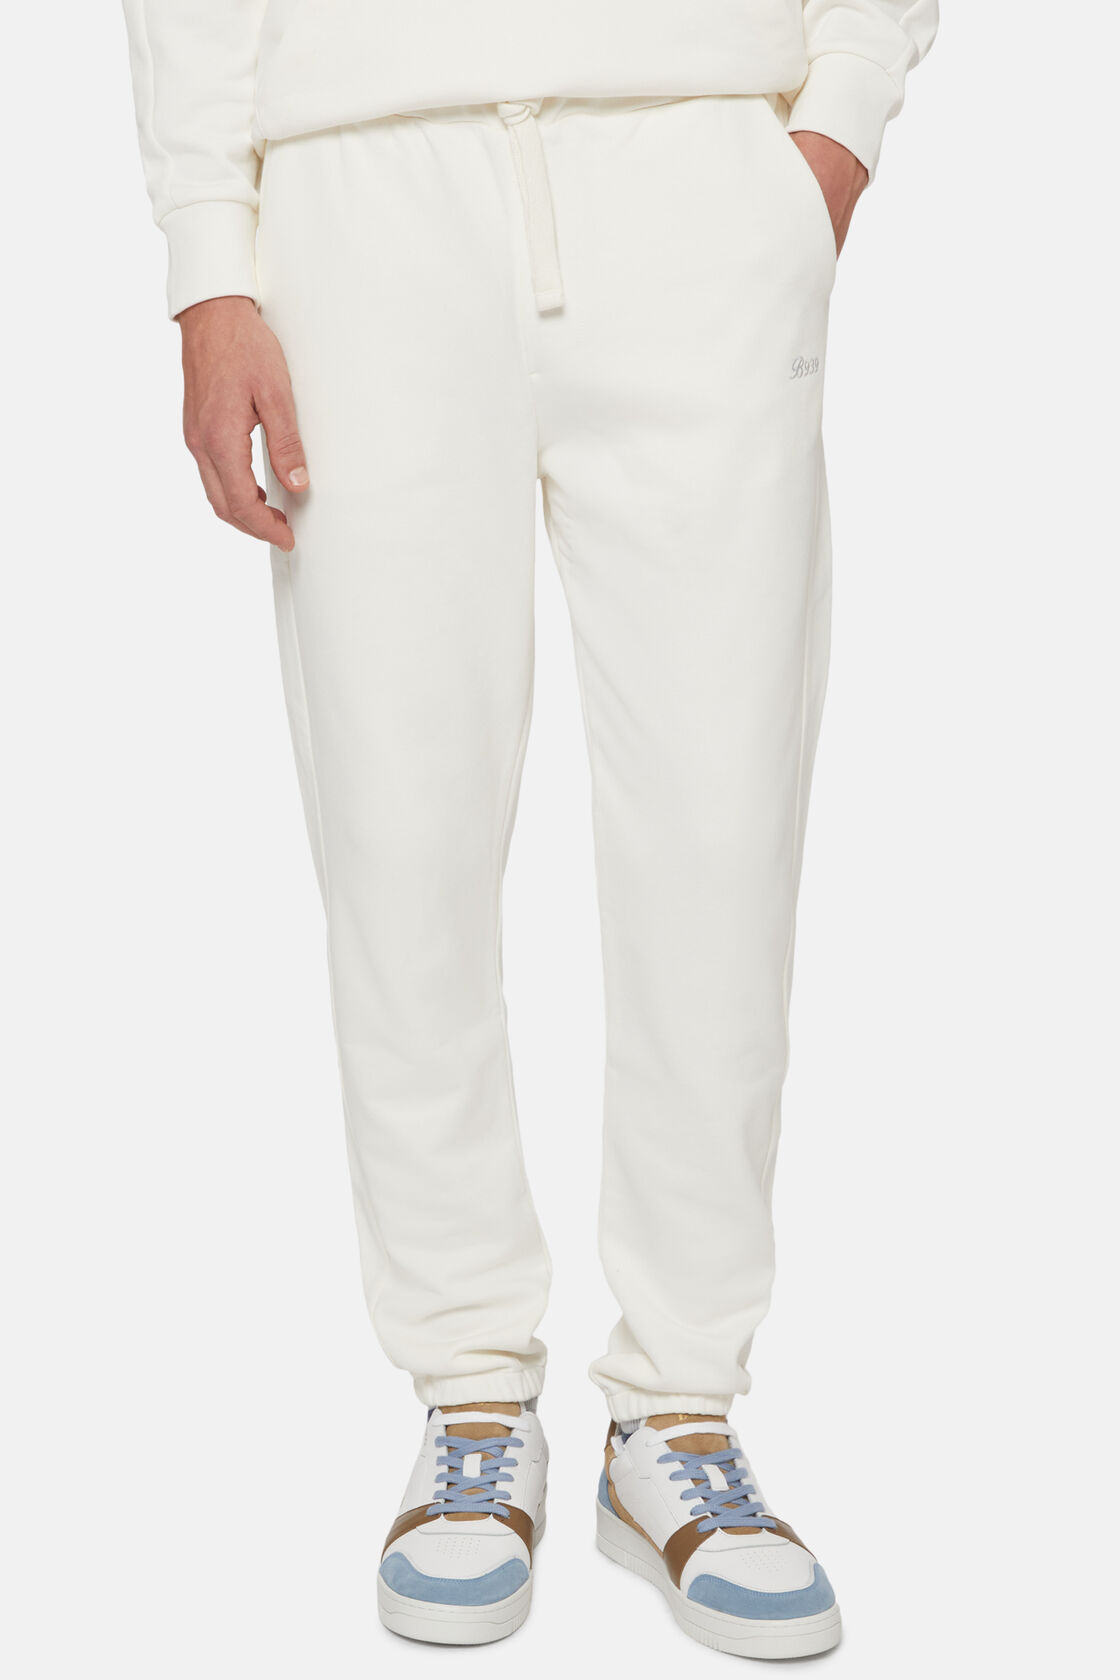 Pantaloni In Misto Cotone Organico, Bianco, hi-res